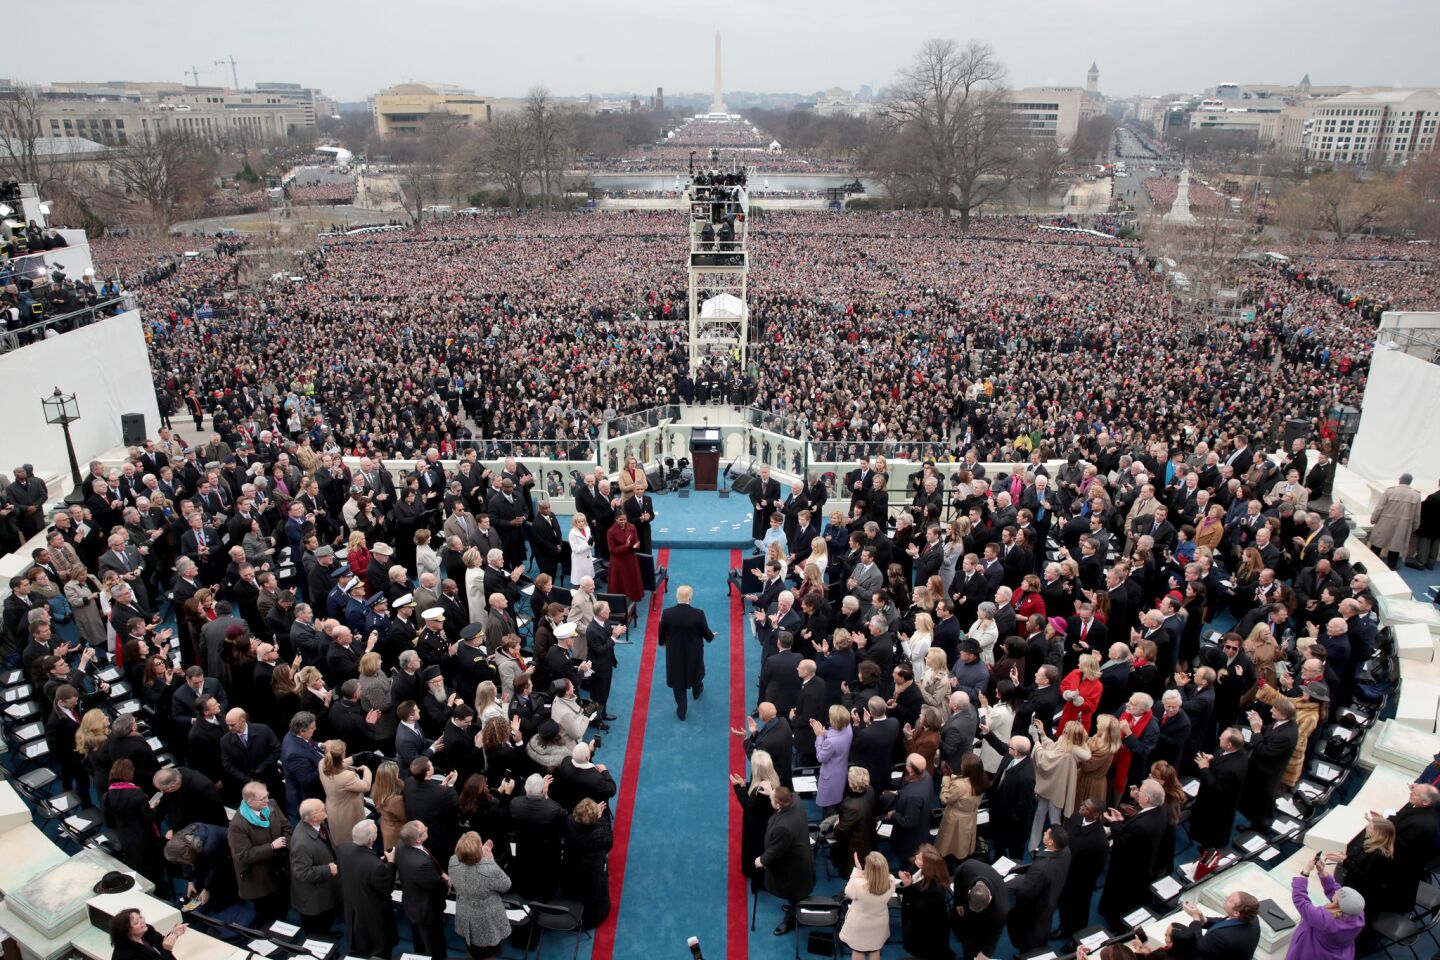 The inauguration of Donald Trump